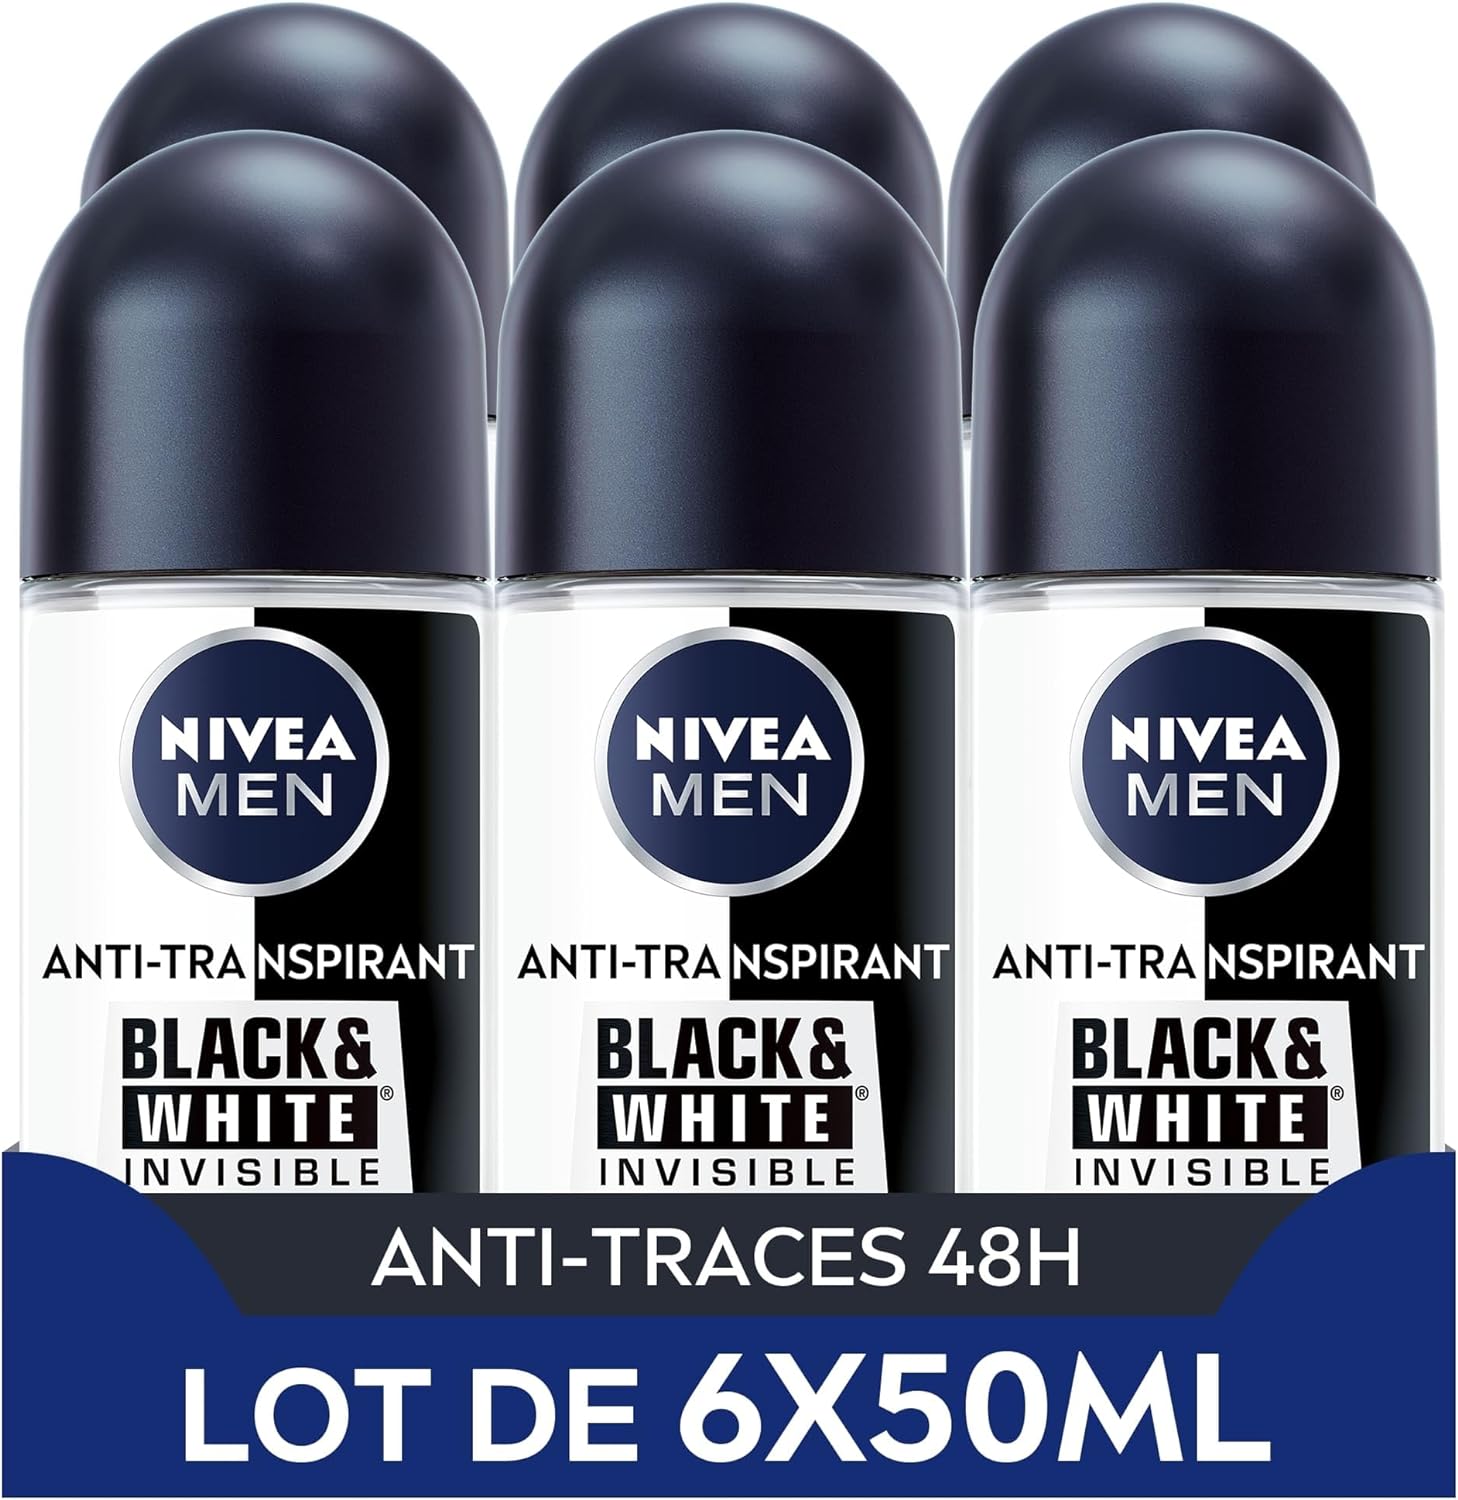 bon-plan-NIVEA MEN Déodorant Bille Invisible For Black & White Power (lot de 6 x 50 ml), déodo...jpg